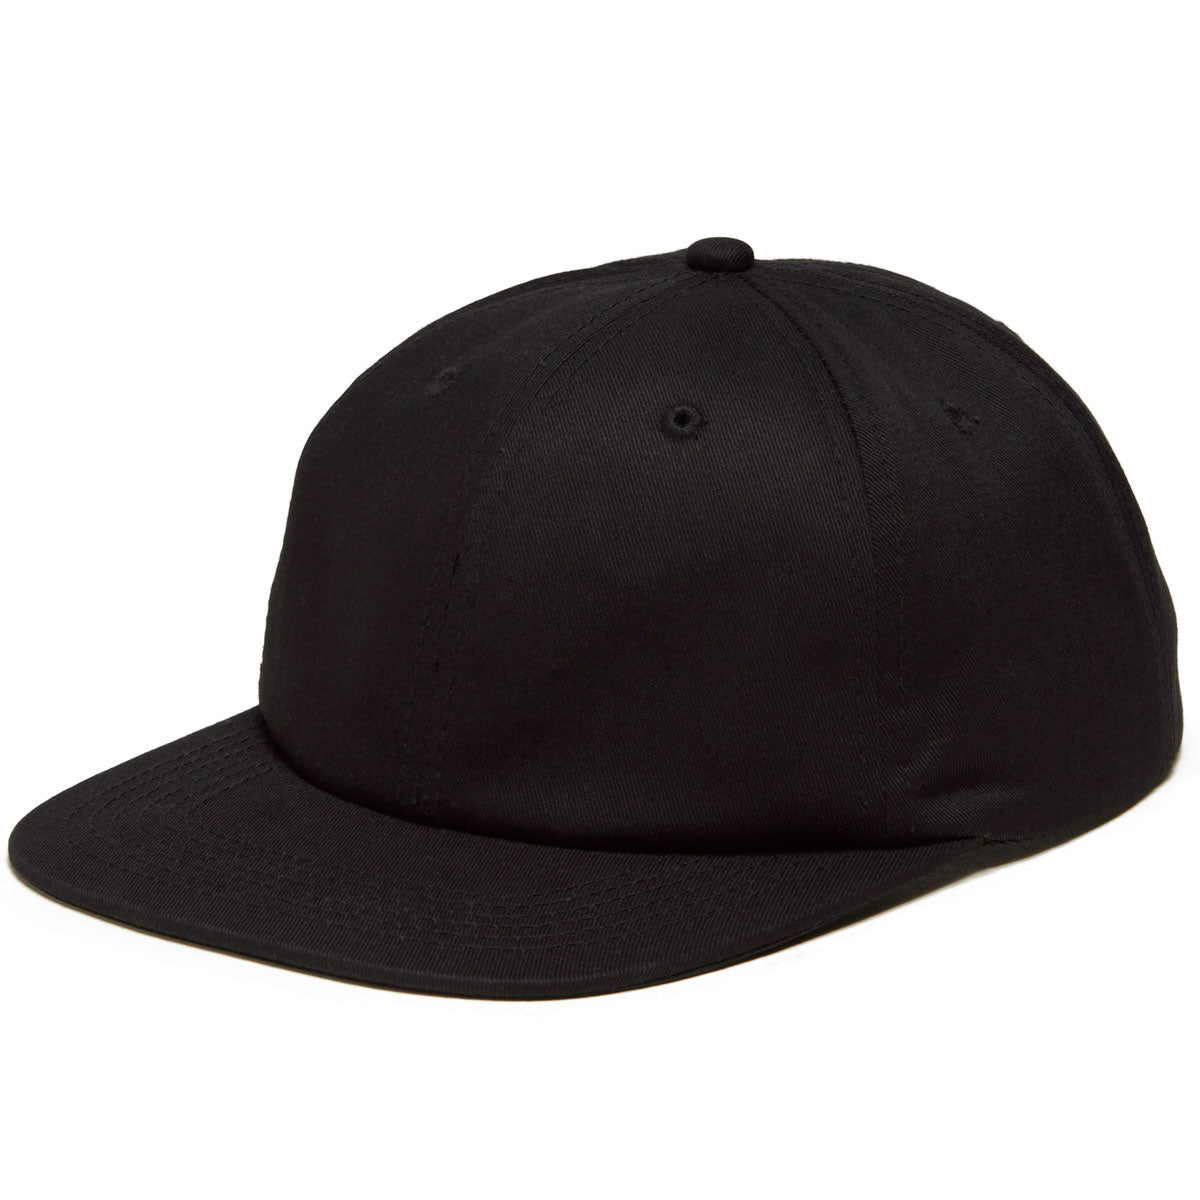 CCS 6 Panel Snapback Hat - Black image 1